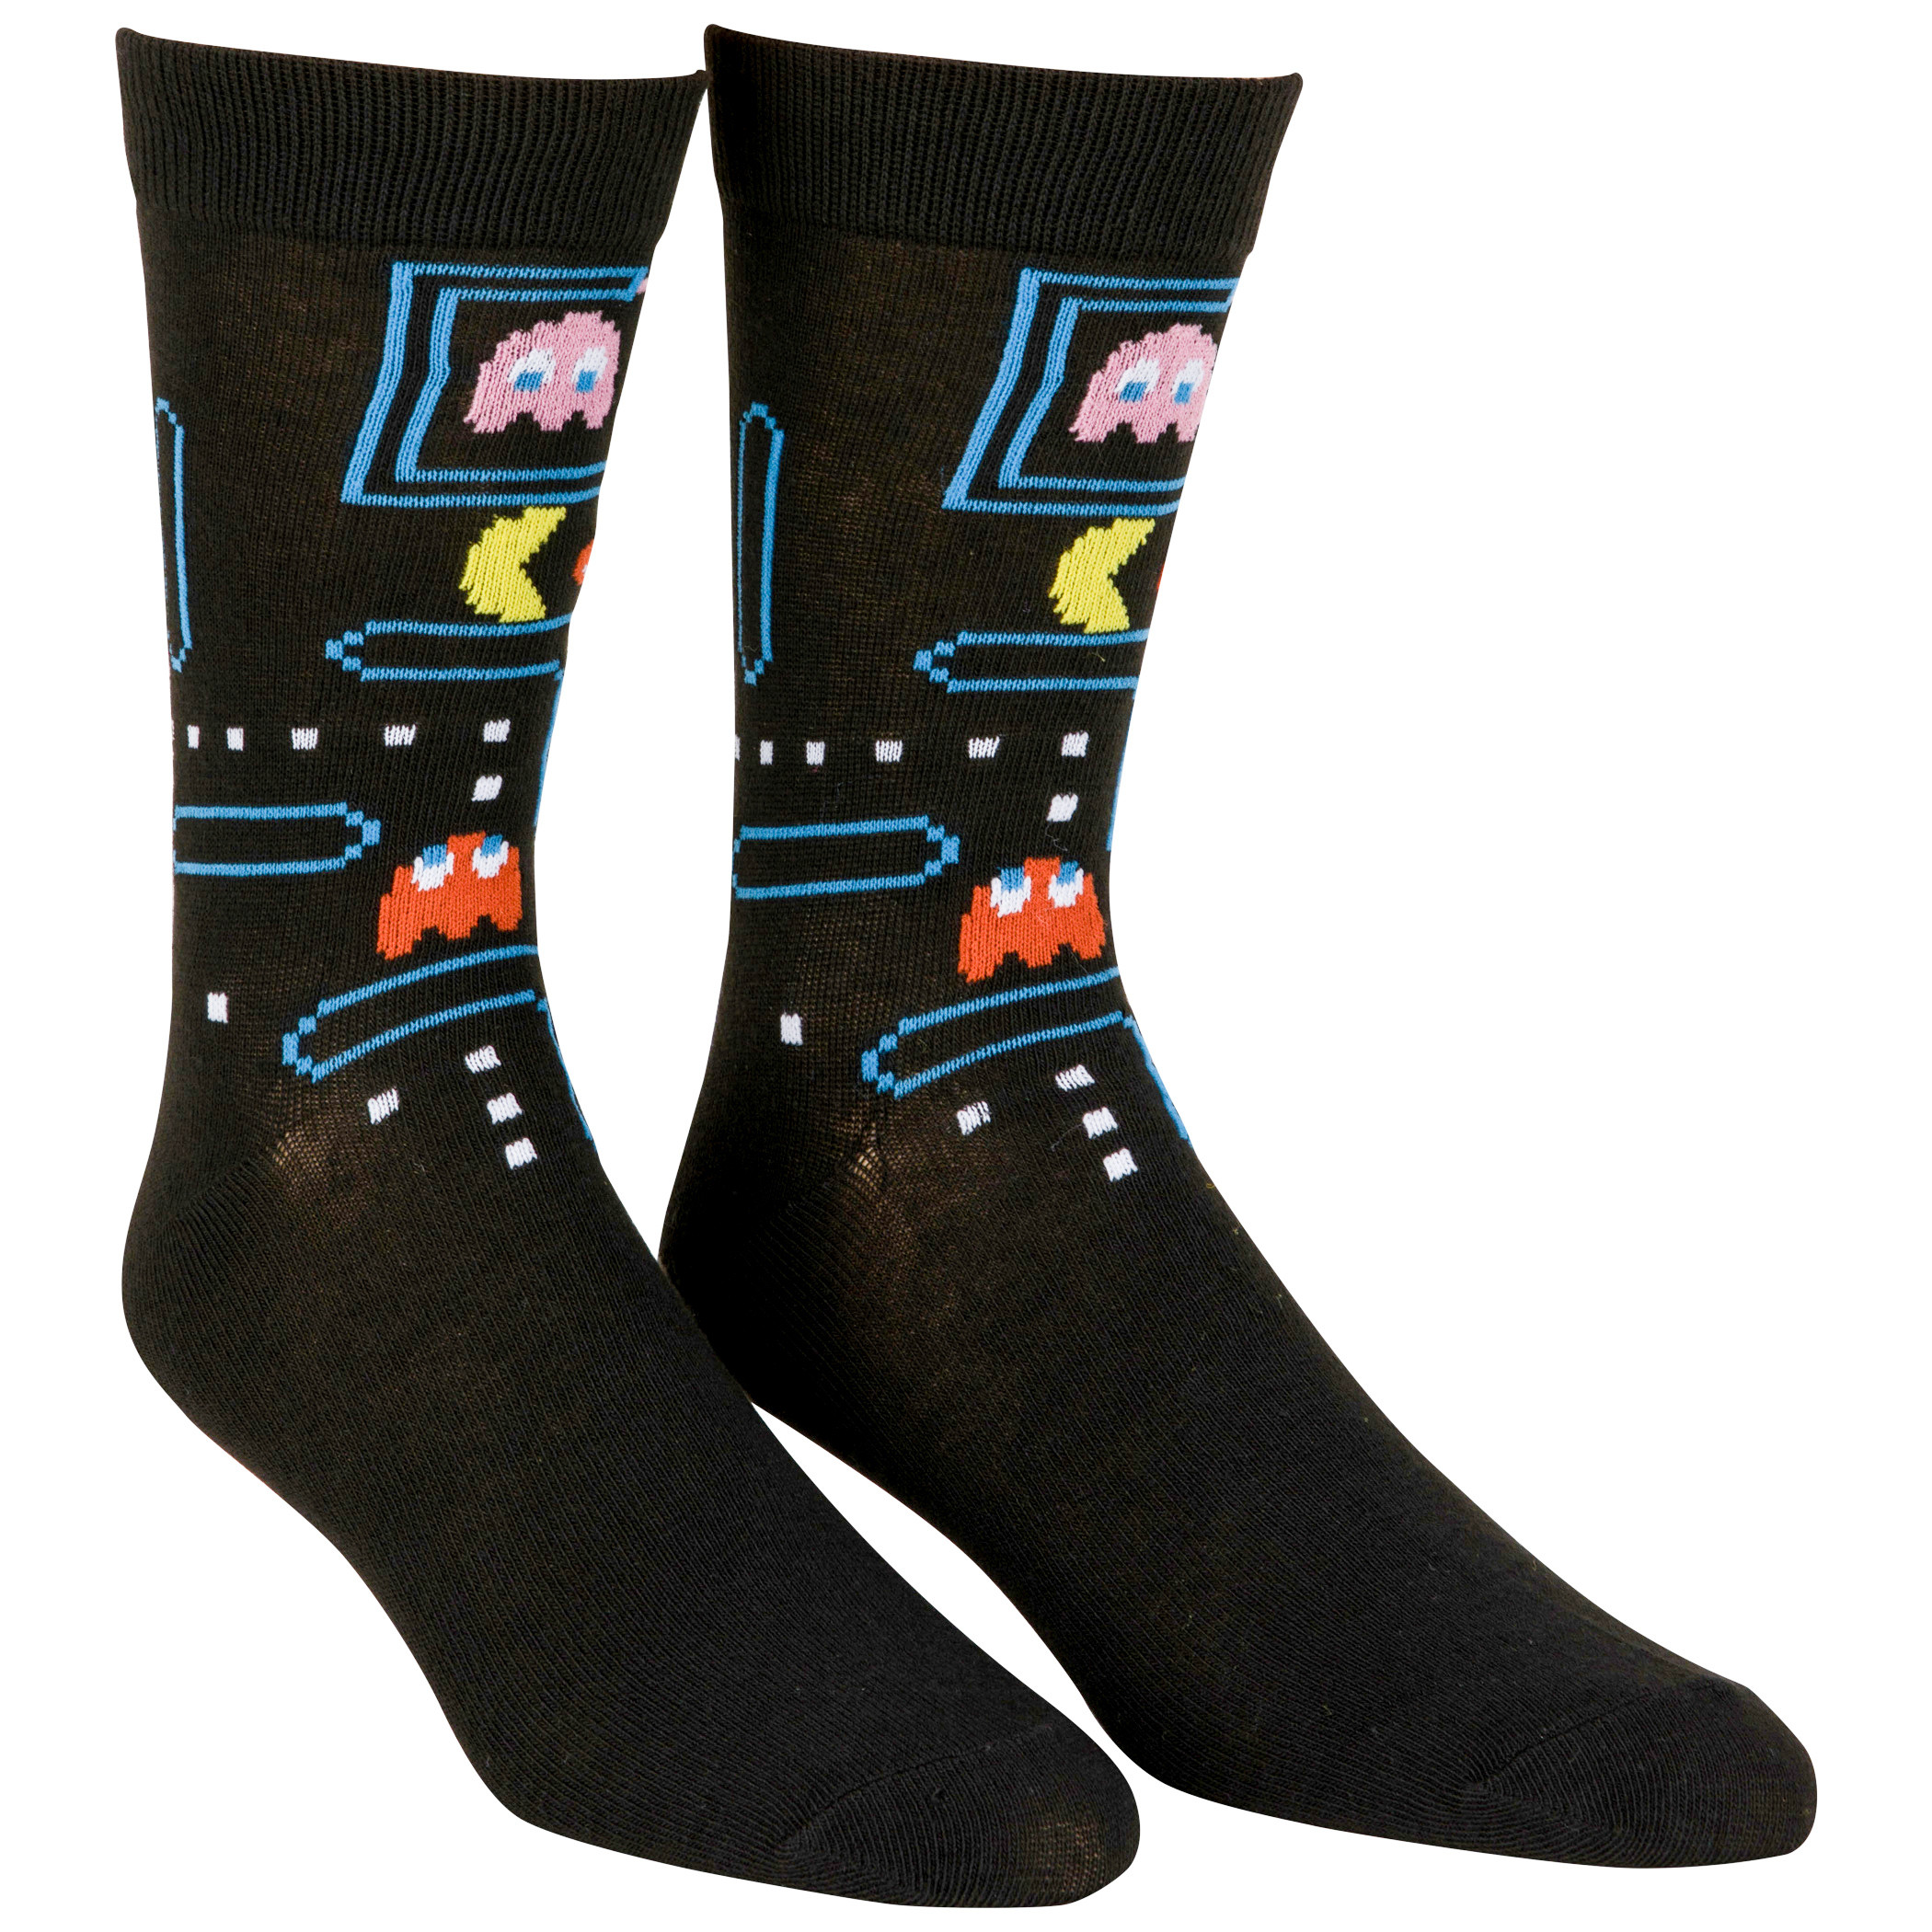 Pac-Man Maze and Logo Men's Crew Socks 2-Pack